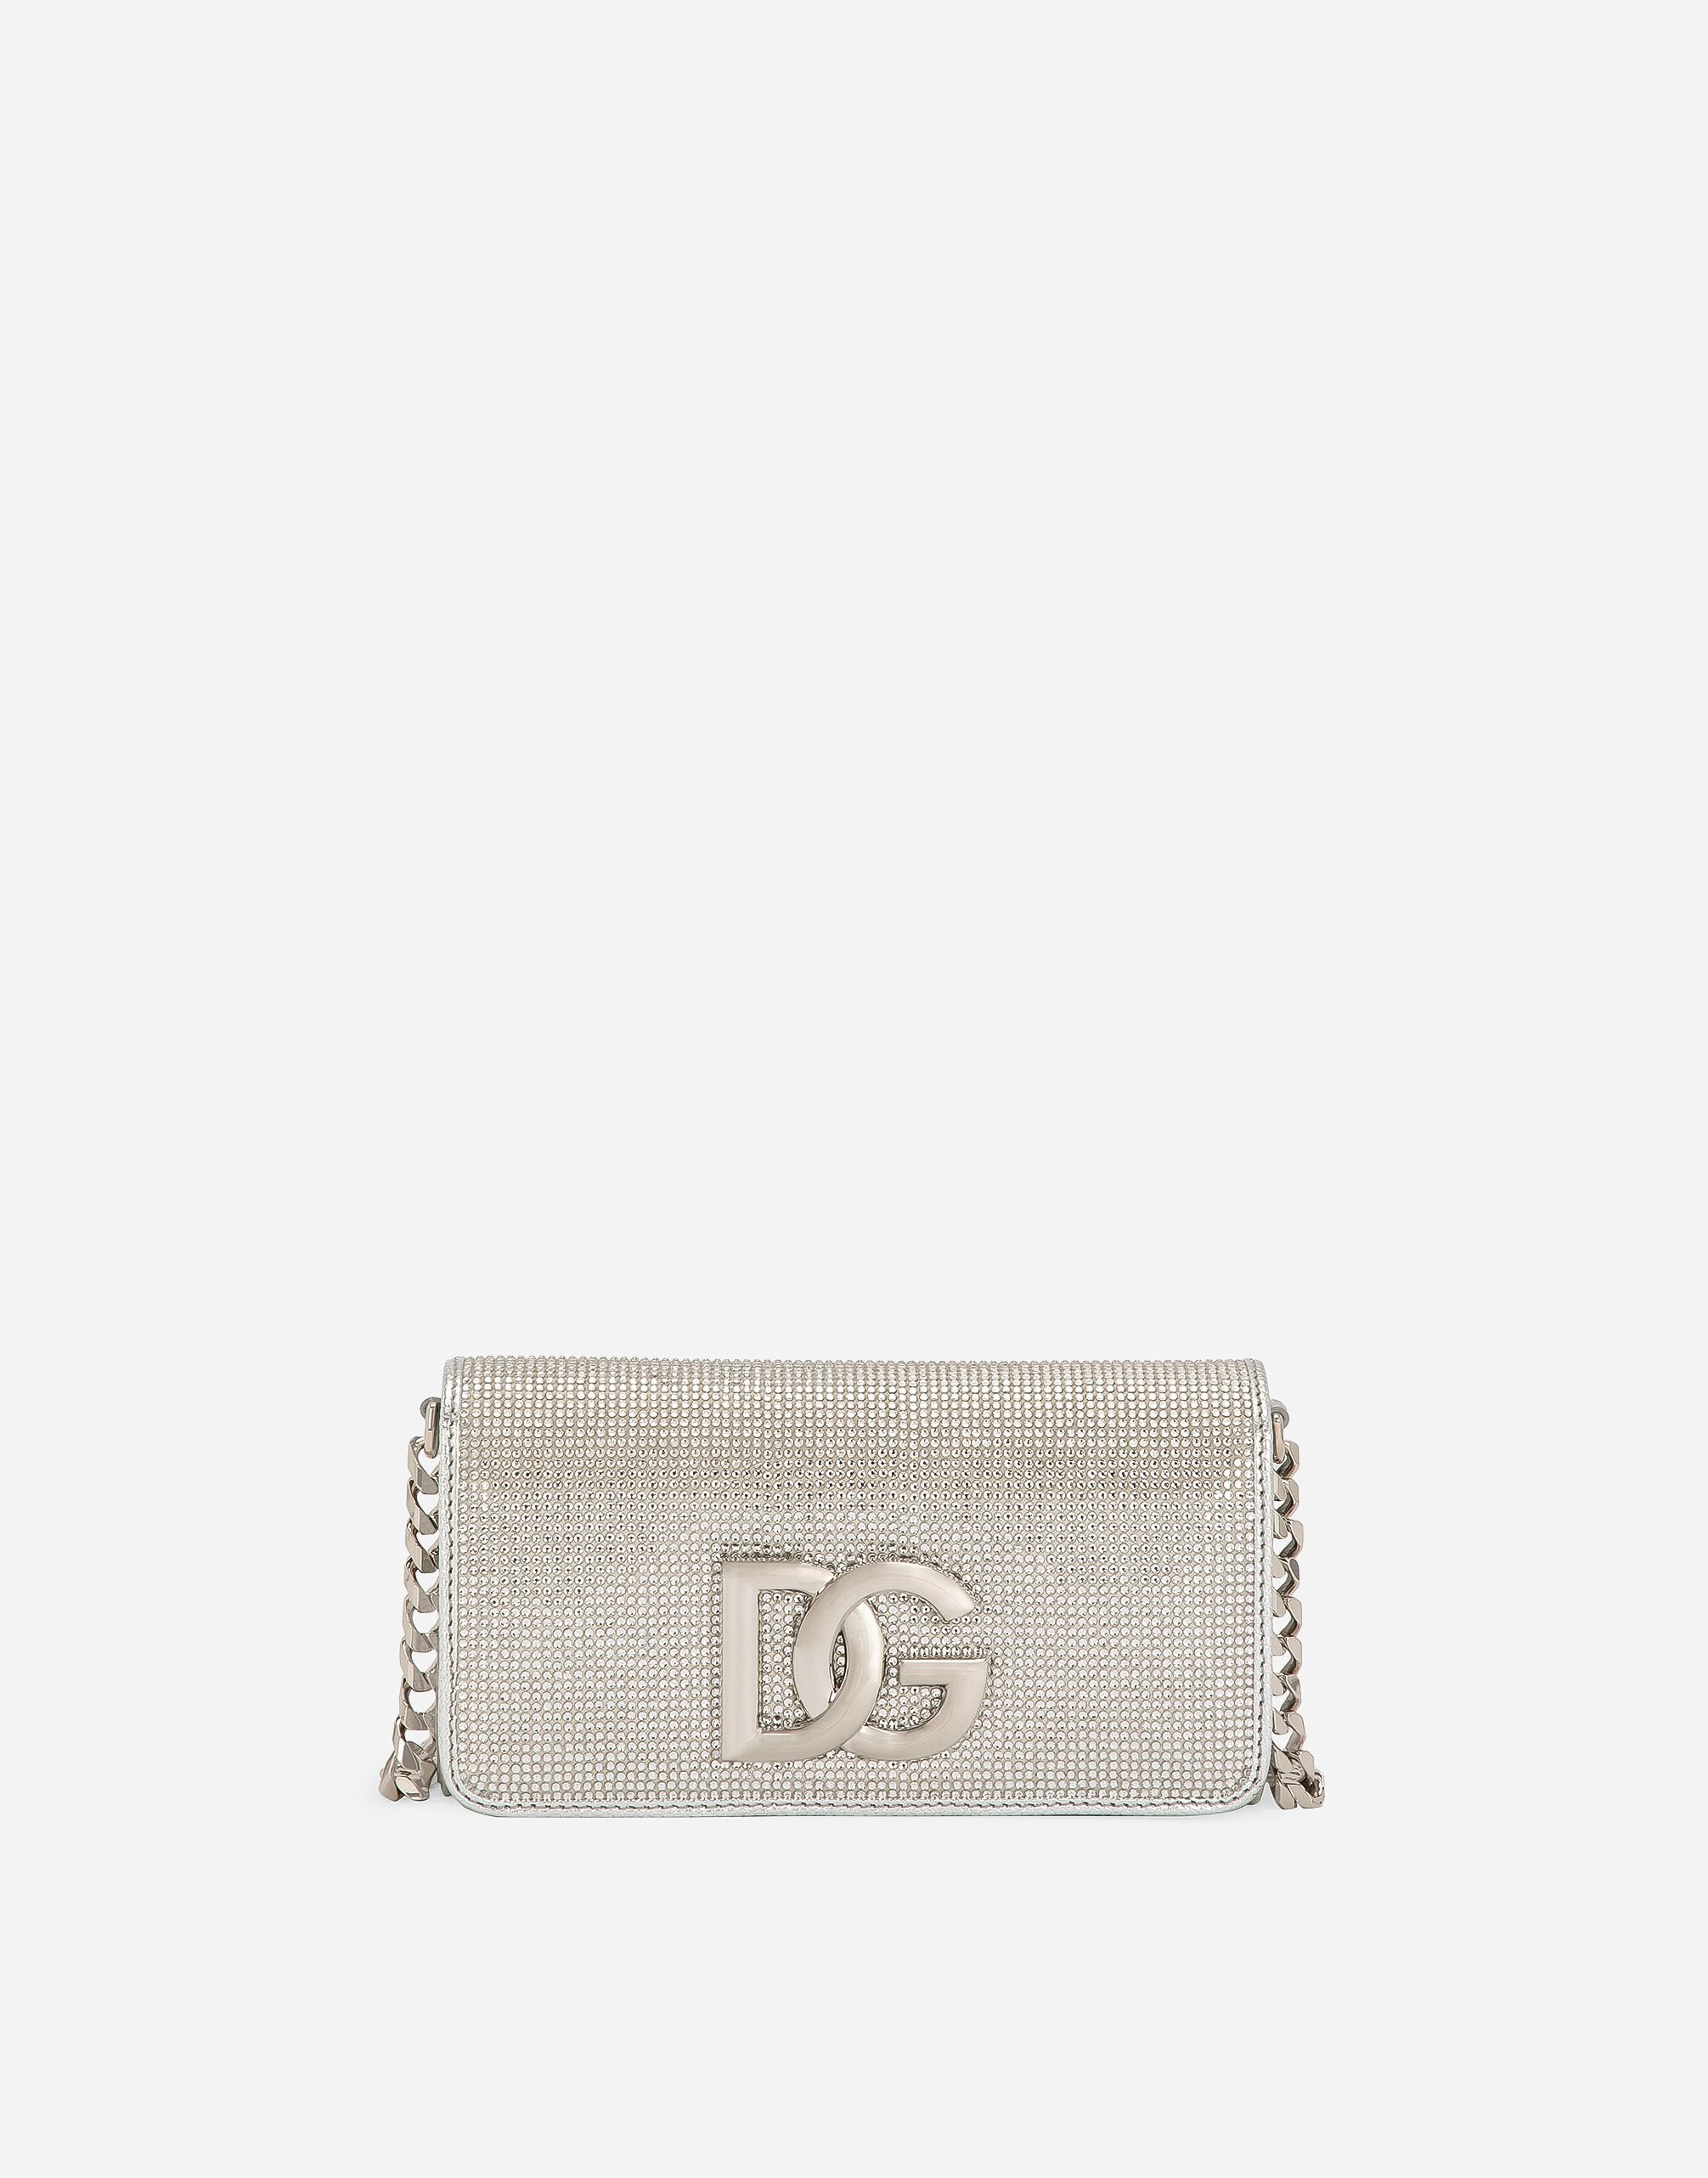 Dolce & Gabbana حقيبة كلاتش 3.5 متعدد الألوان BB7655A4547